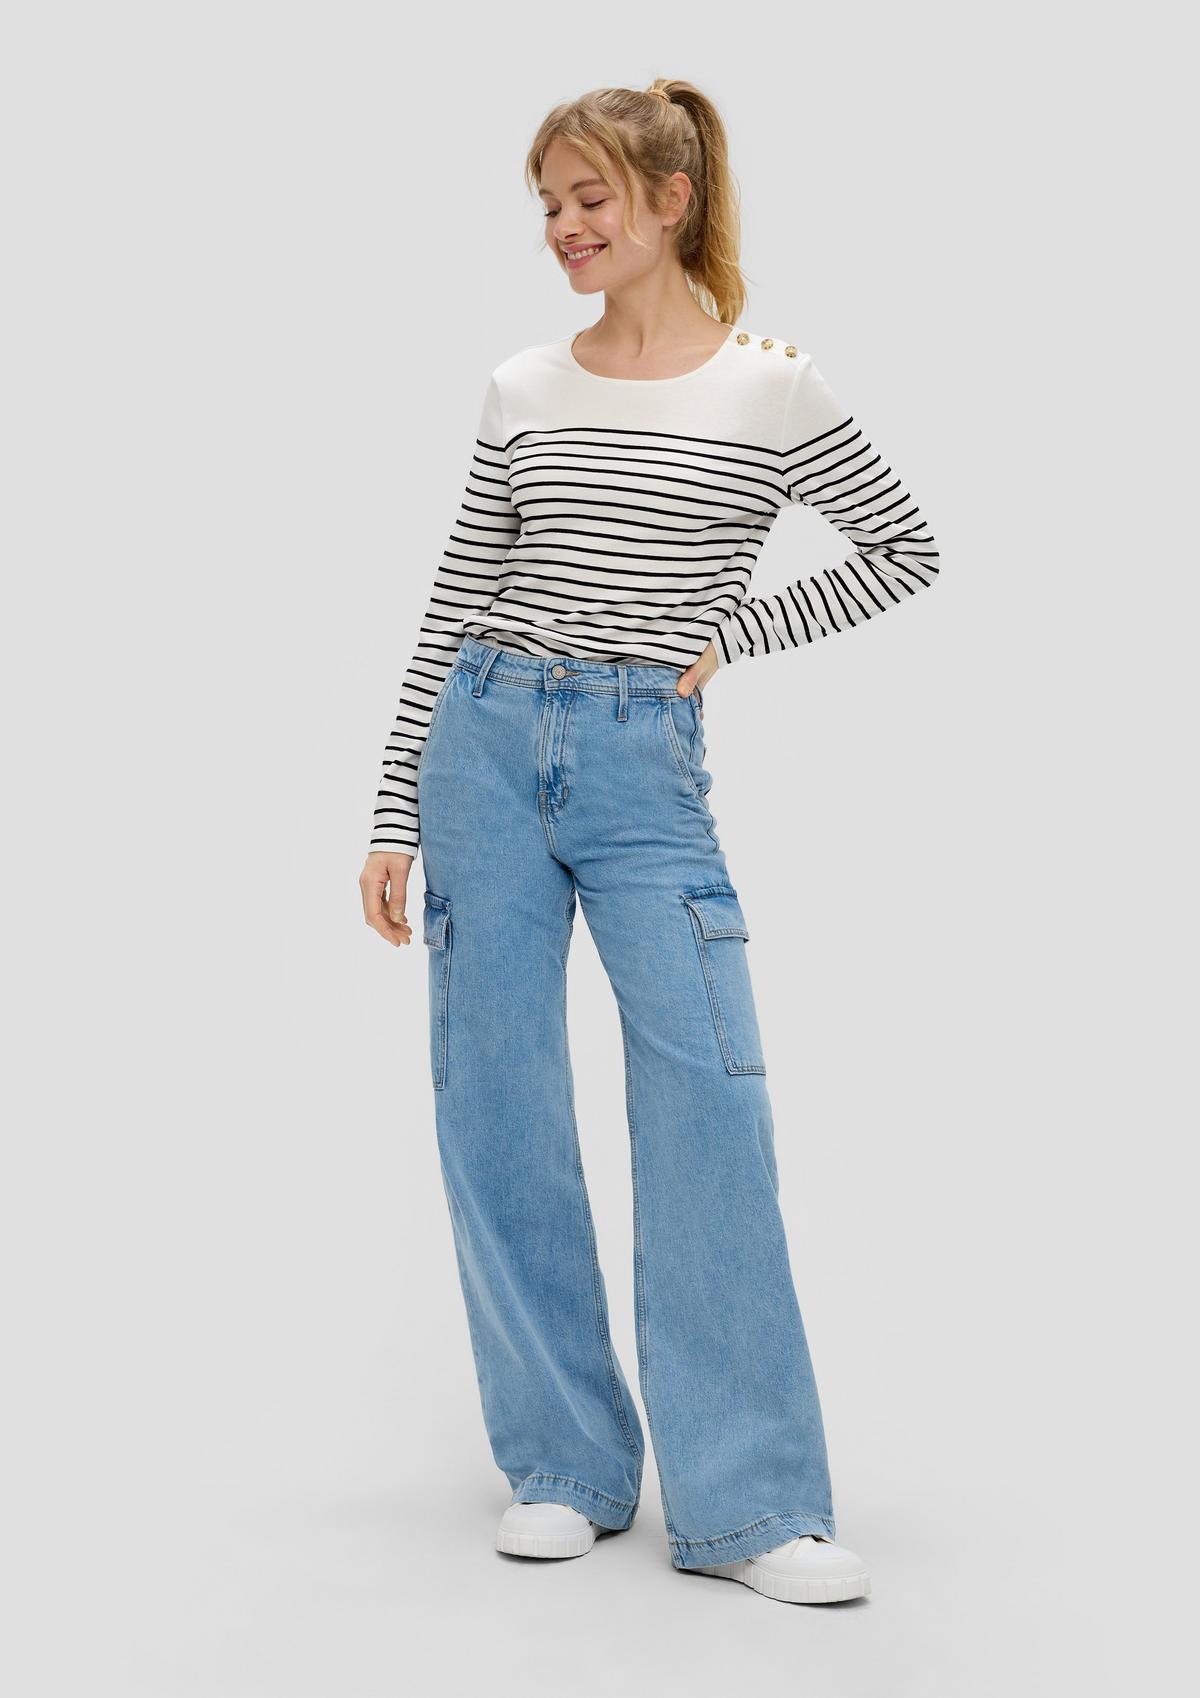 Suri jeans / mid rise / wide leg / cargo pockets